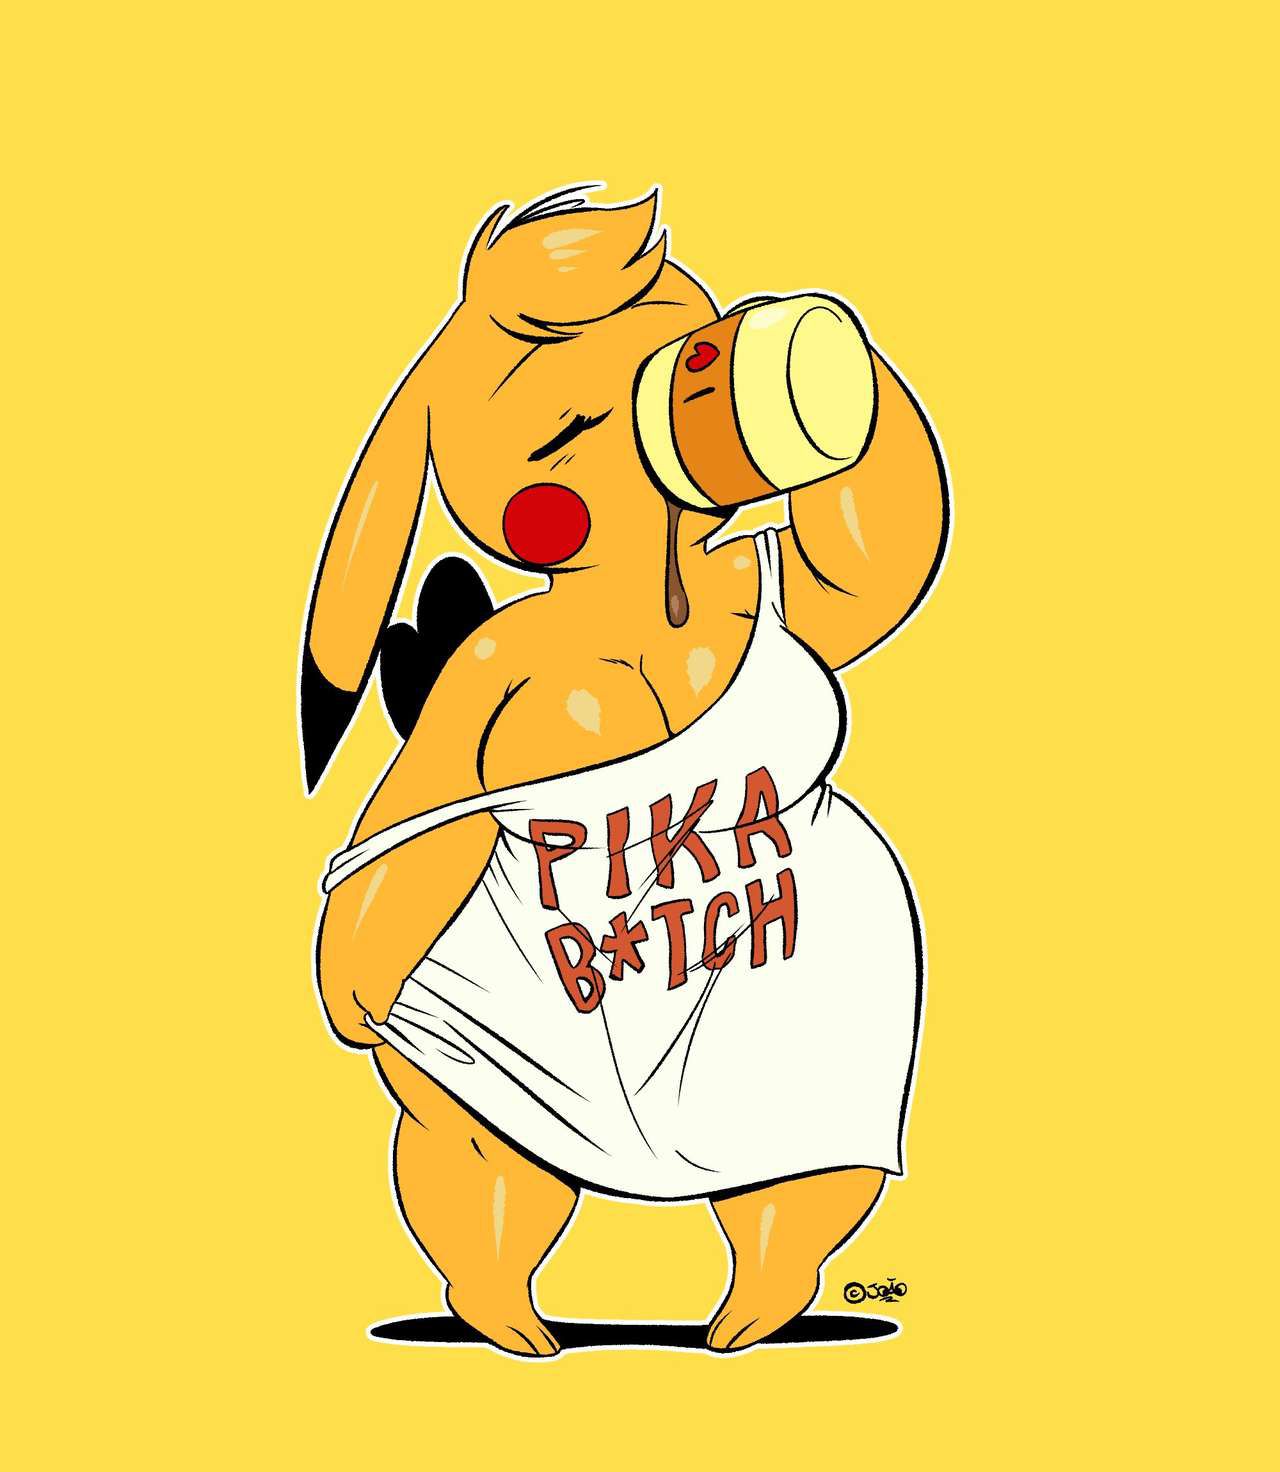 Pikachu so hot 200